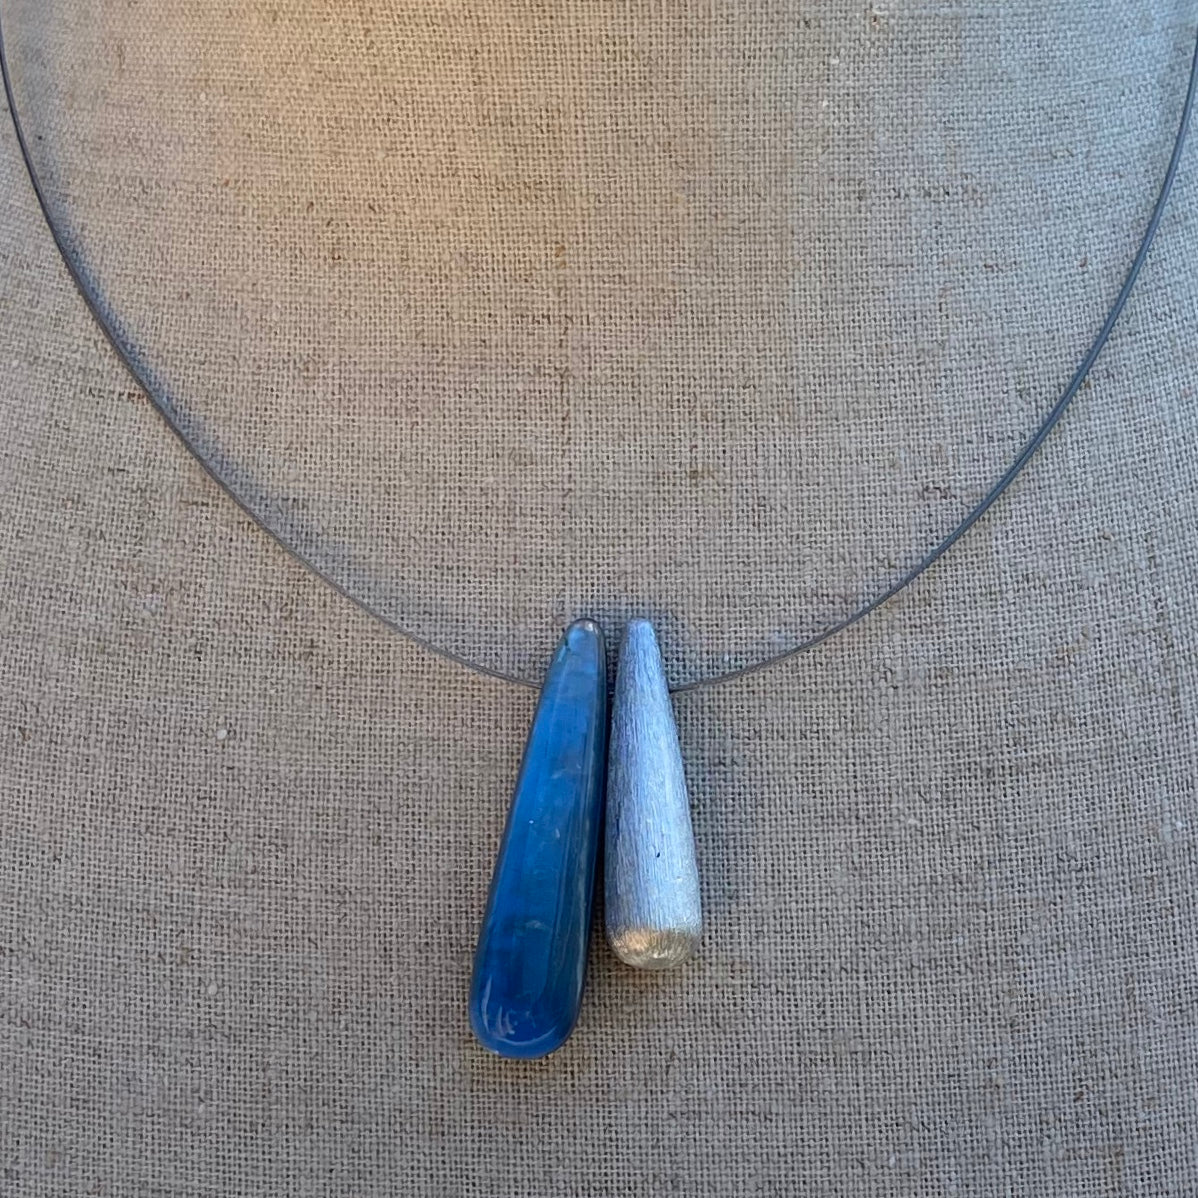 Blue 2 Piece Pendant - The Nancy Smillie Shop - Art, Jewellery & Designer Gifts Glasgow